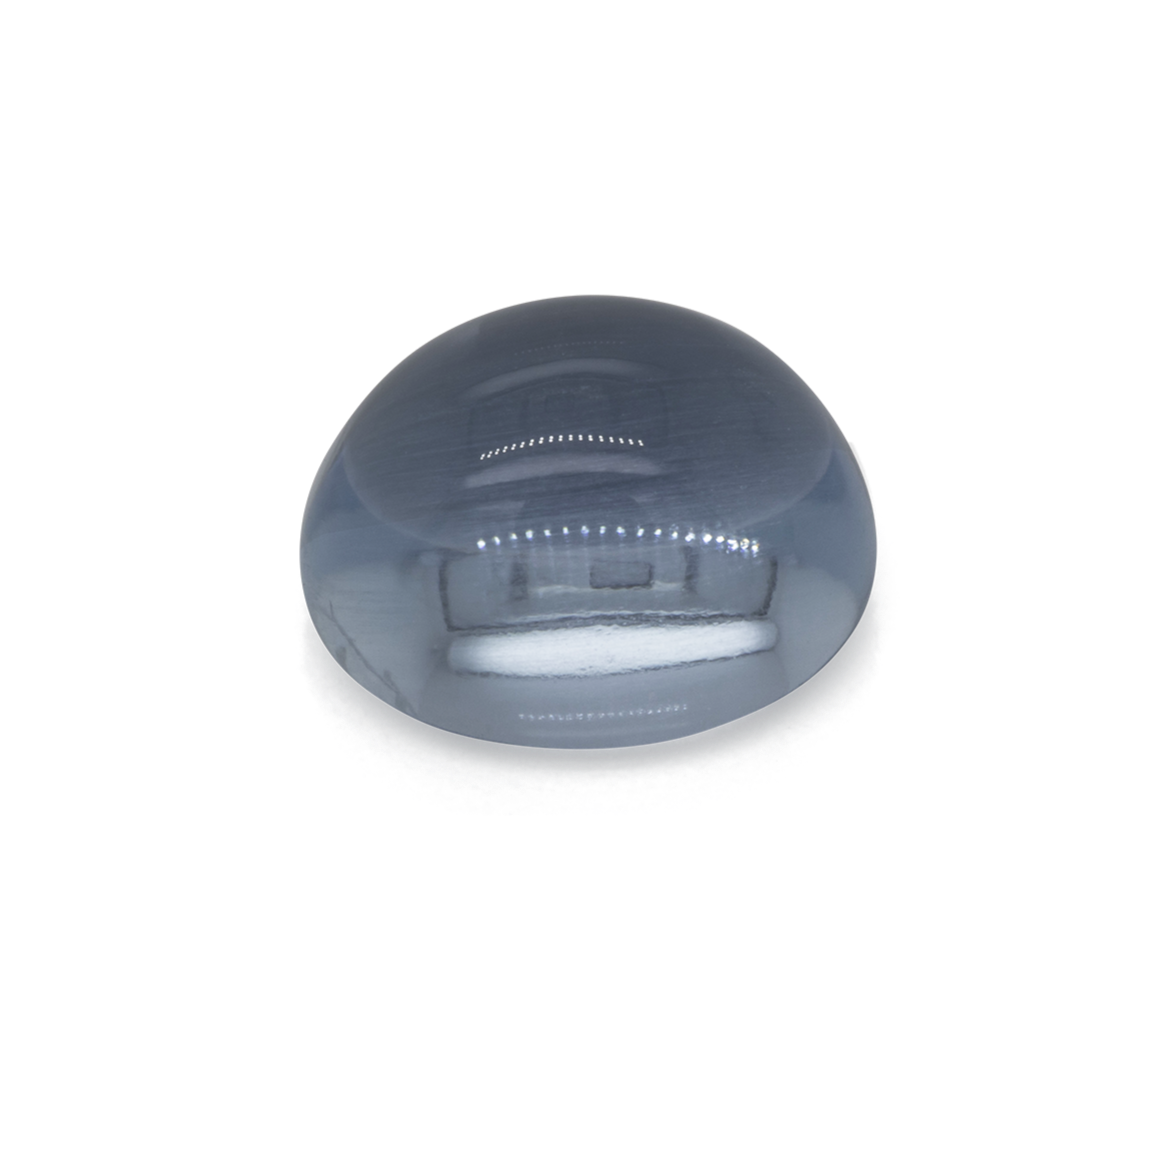 Aquamarine - A, oval, 9.1x7.6 mm, 2.75 cts, No. A10102